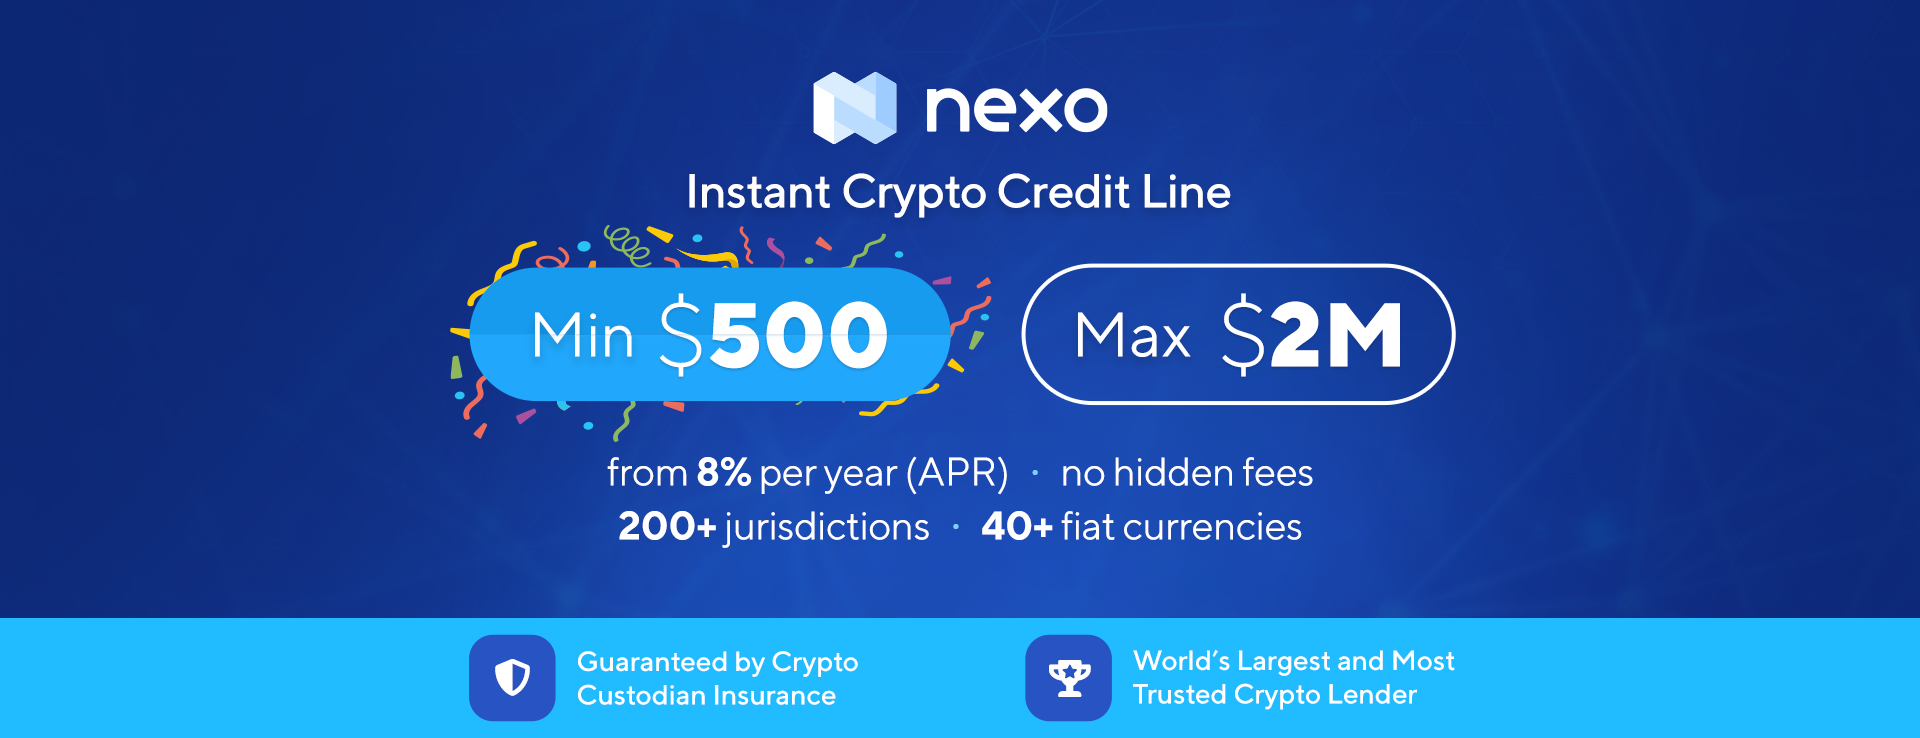 New $500 Minimum Amount for Nexo’s Instant Crypto Credit Lines